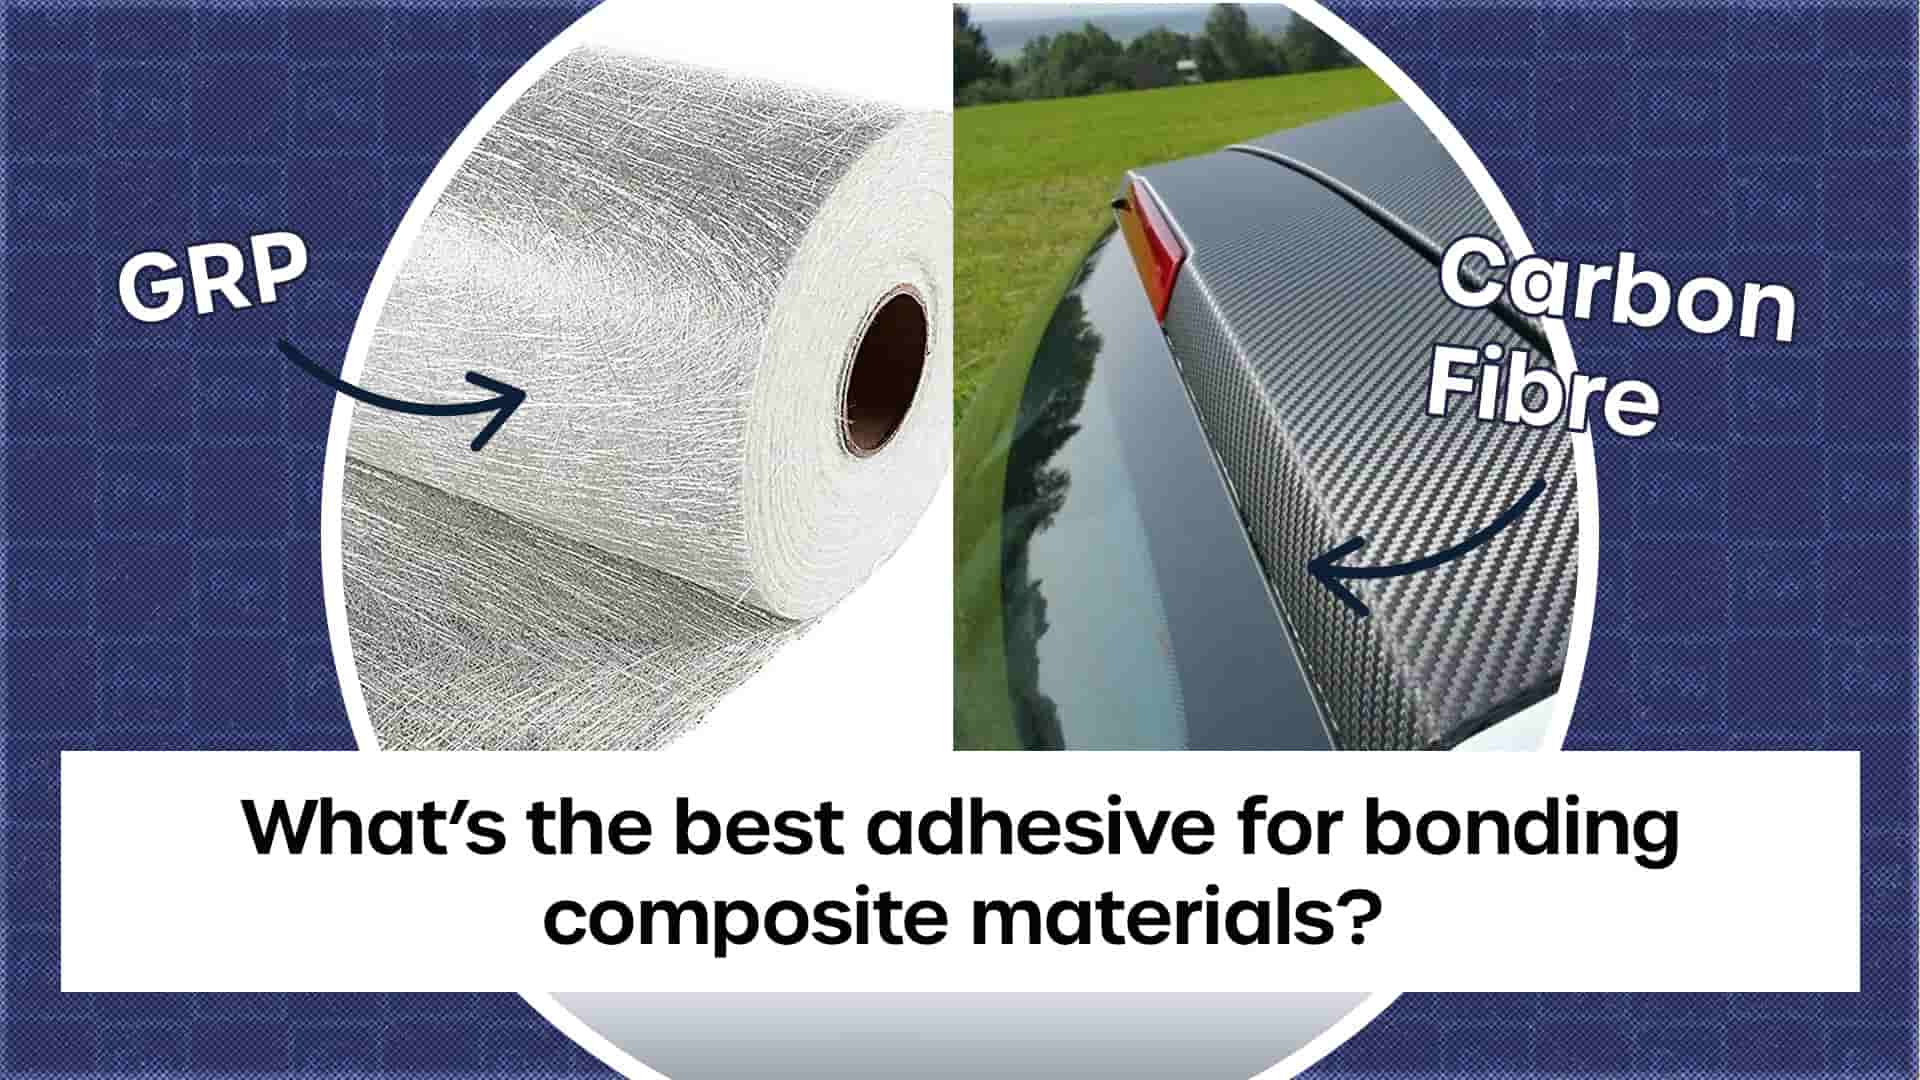 Tips and tricks for bonding composite materials like GRP and Carbon Fibre